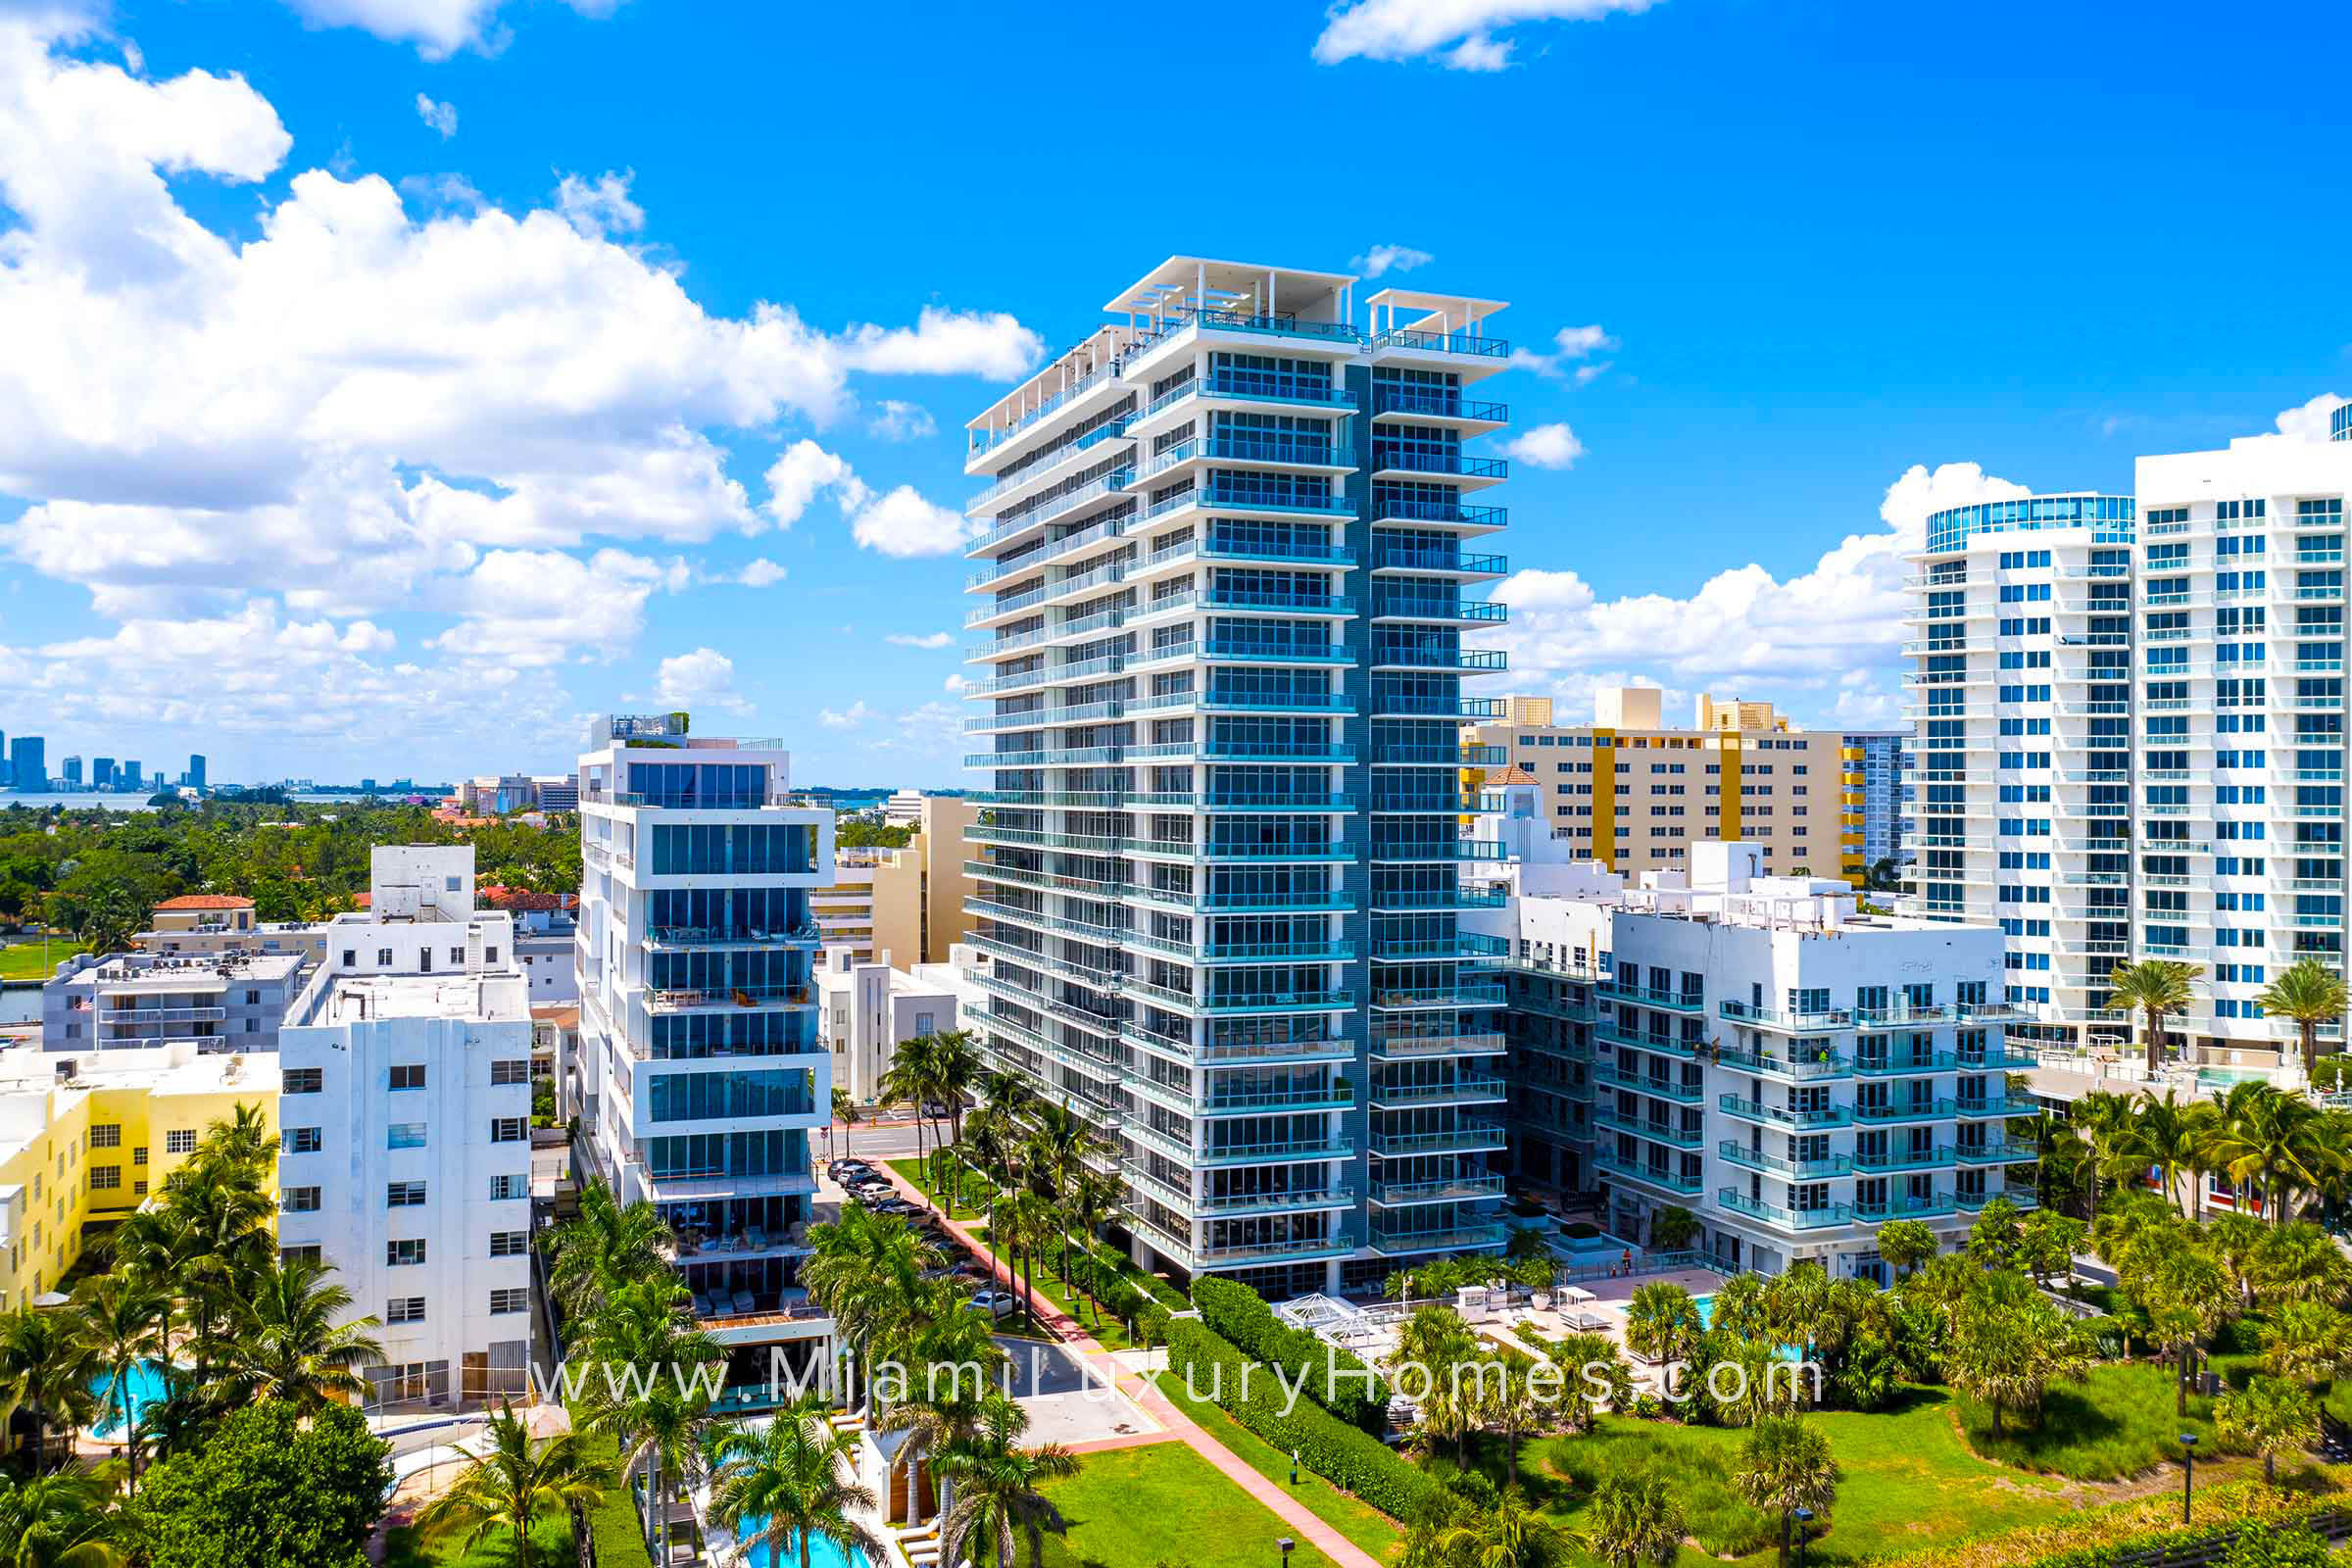 Caribbean Condo Building Miami